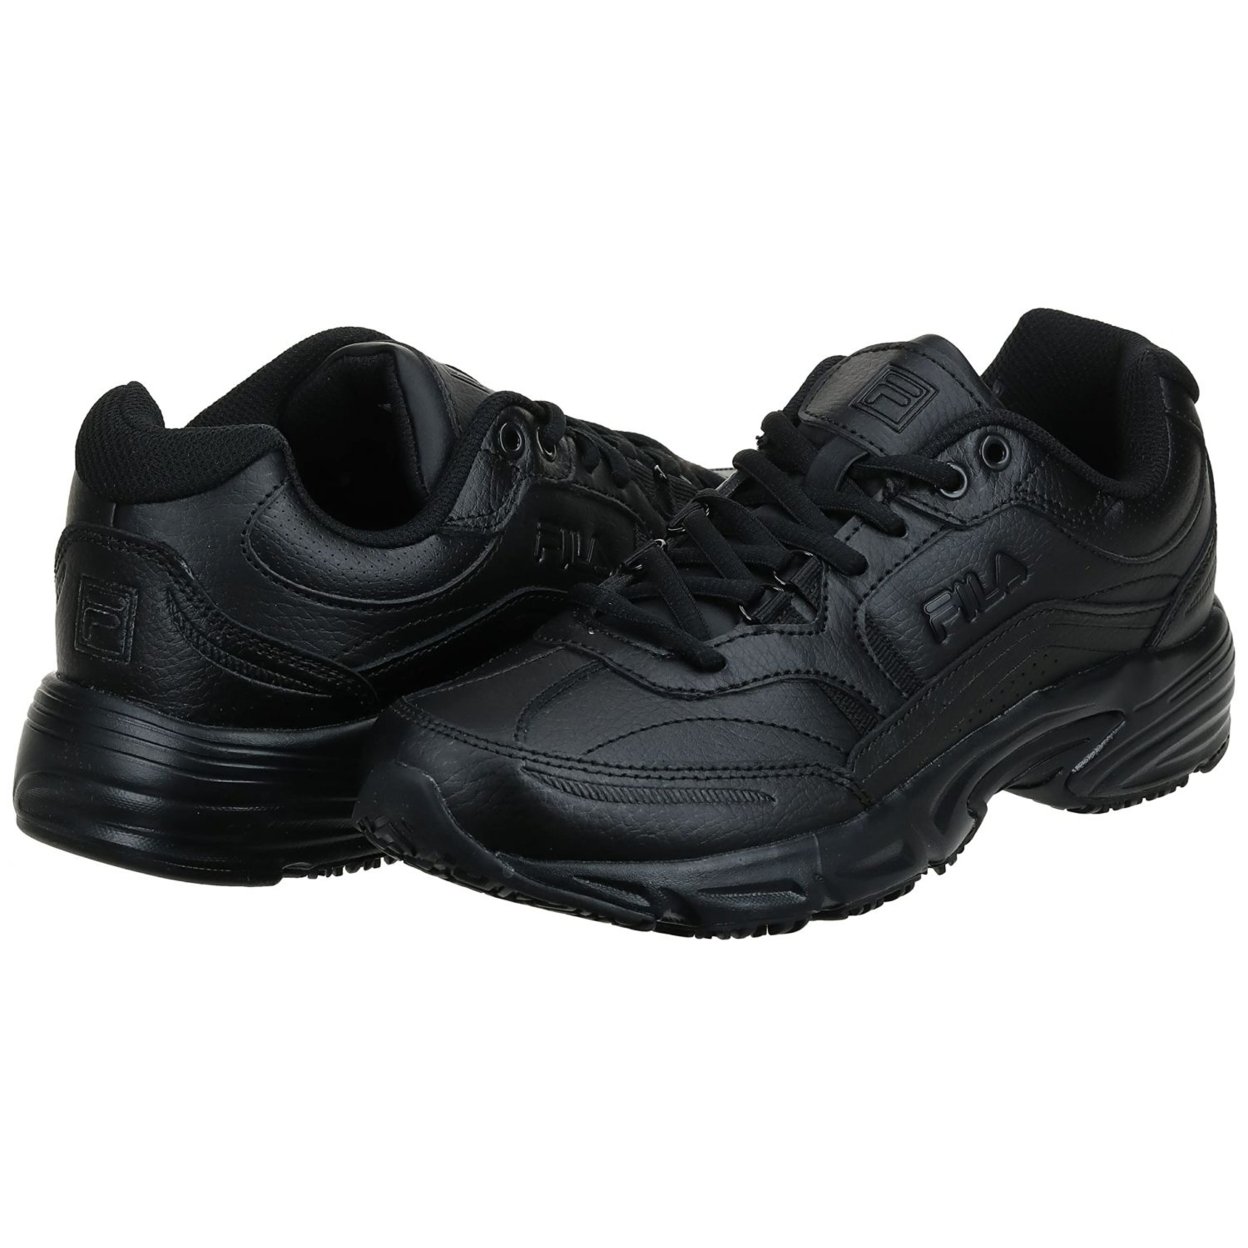 Fila Men's Memory Workshift-m Shoes M US Men BLK/BLK/BLK - Black/black/black, 8